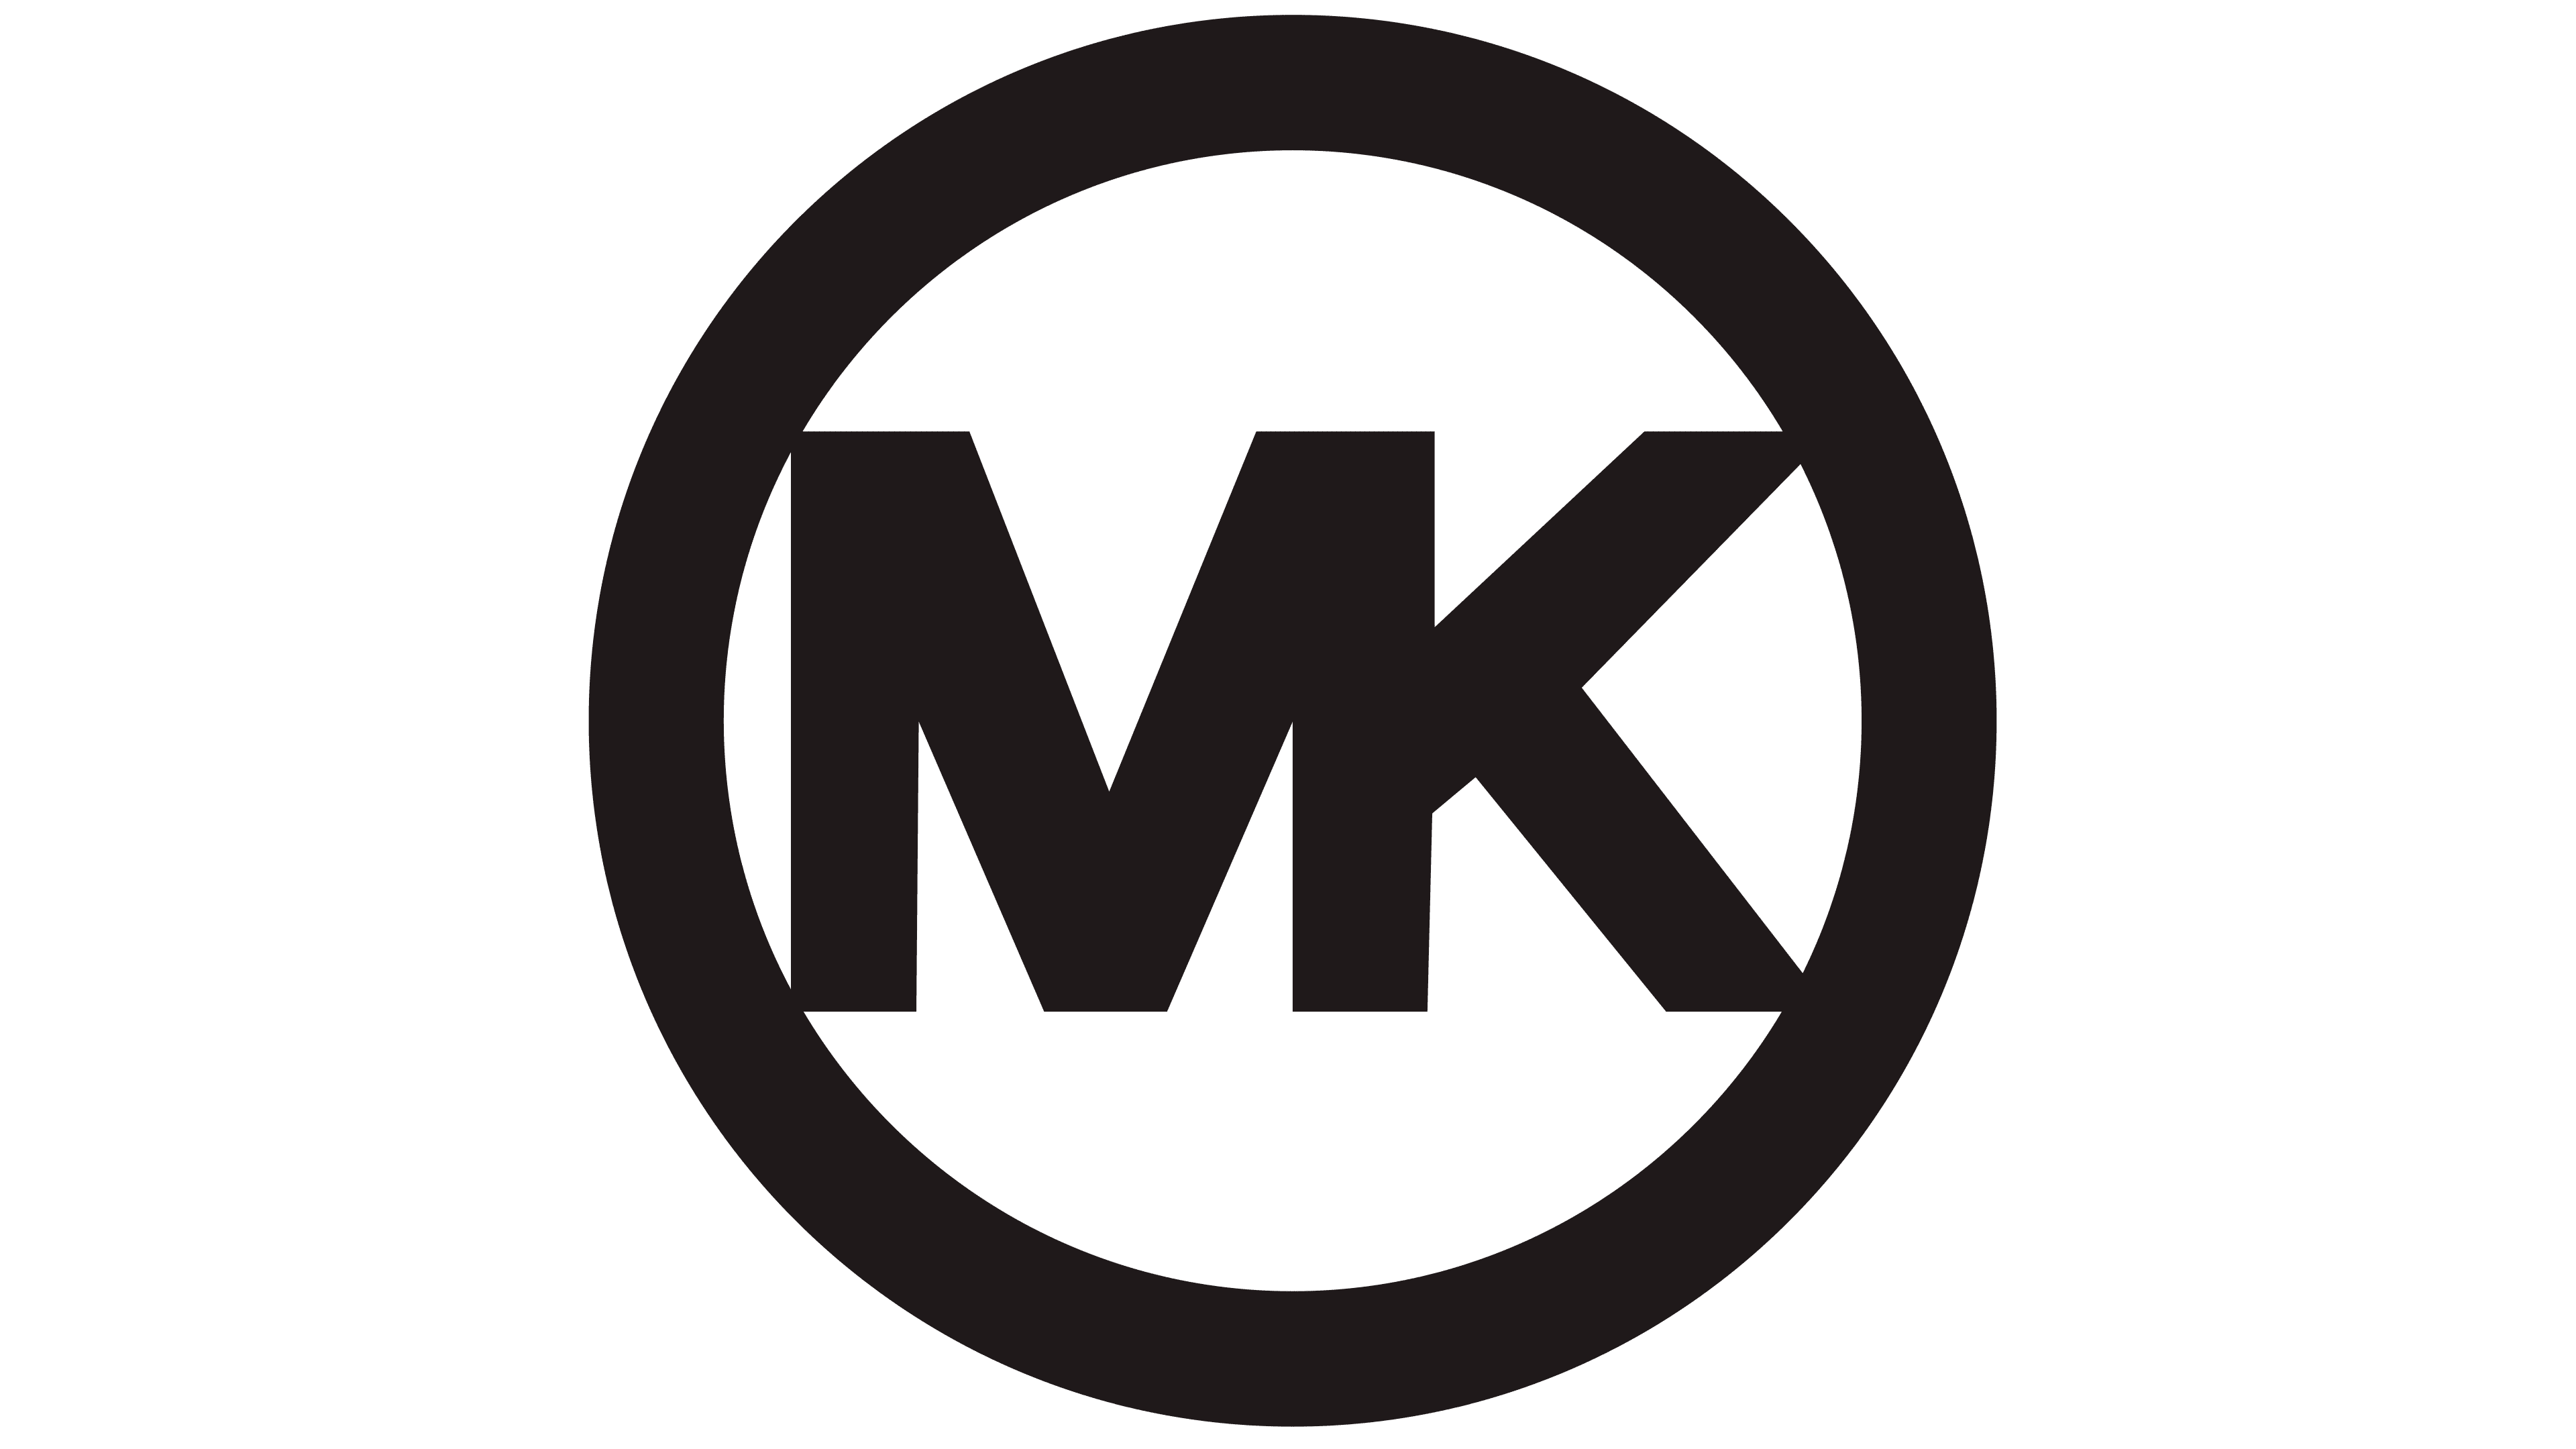 Michael Kors Logo | The most famous 